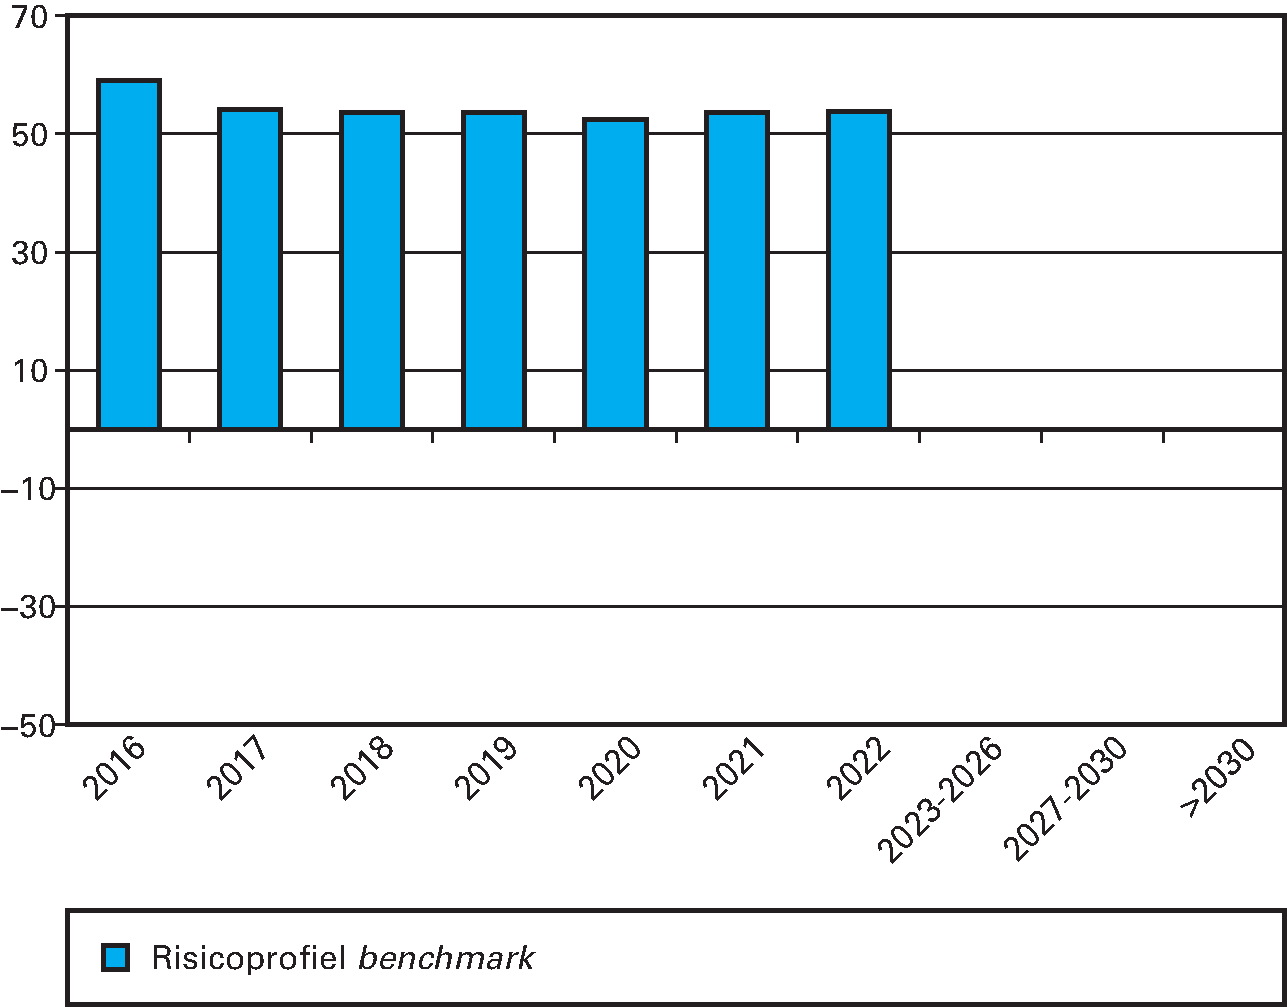 Risicoprofiel van de benchmark ultimo 2015 (x € 1 miljard)